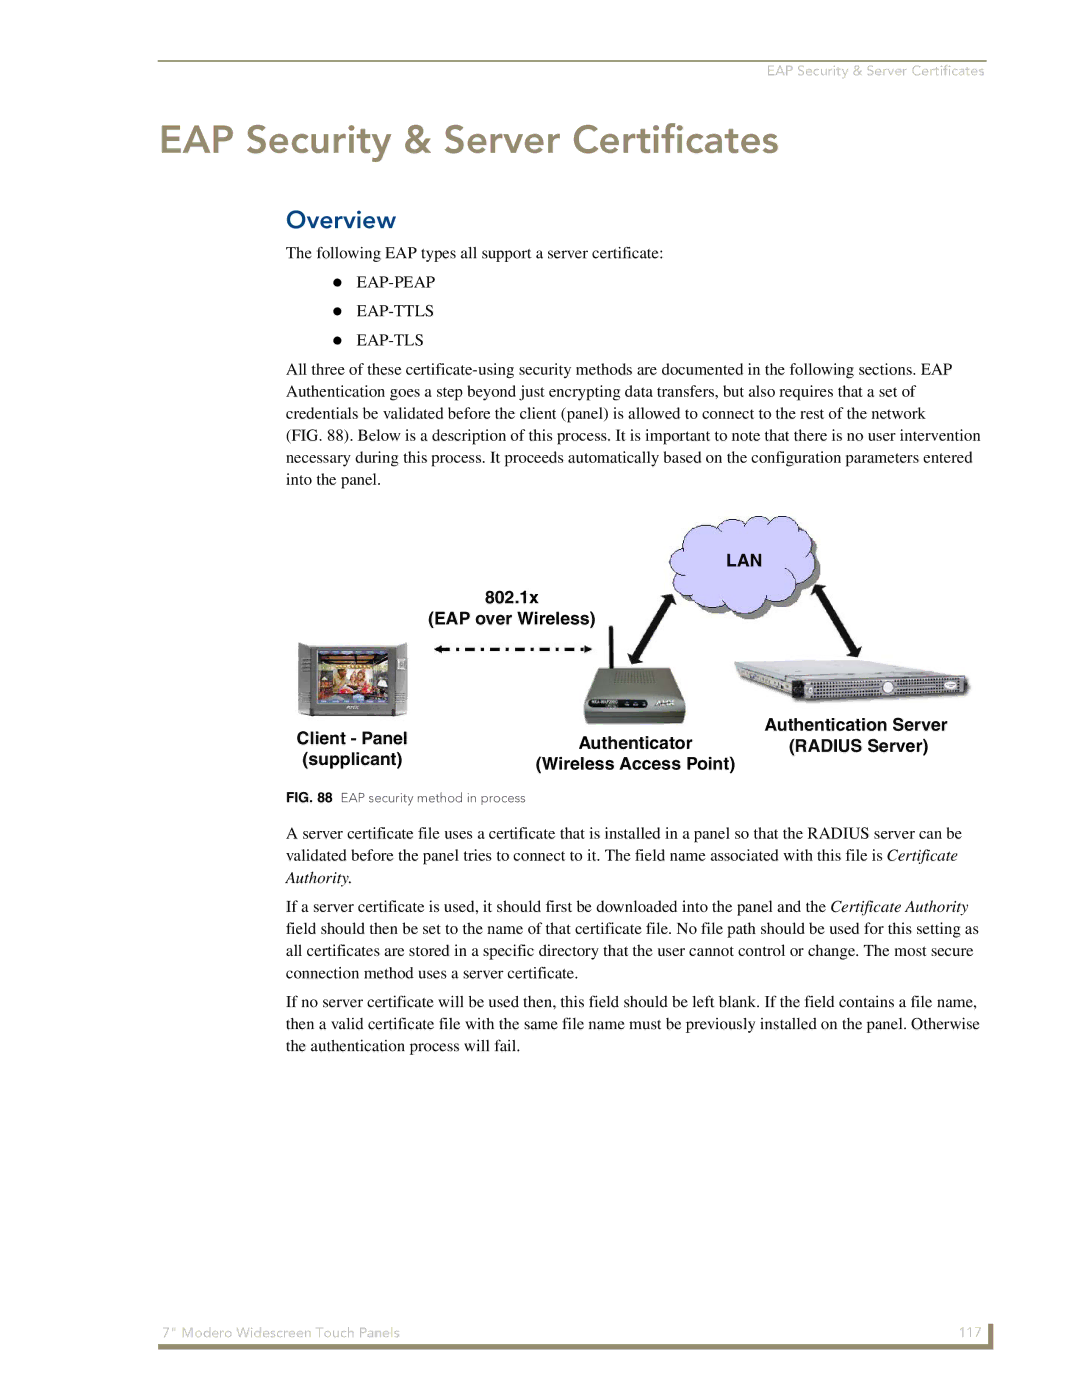 AMX NXD-700Vi manual EAP Security & Server Certificates, Overview 